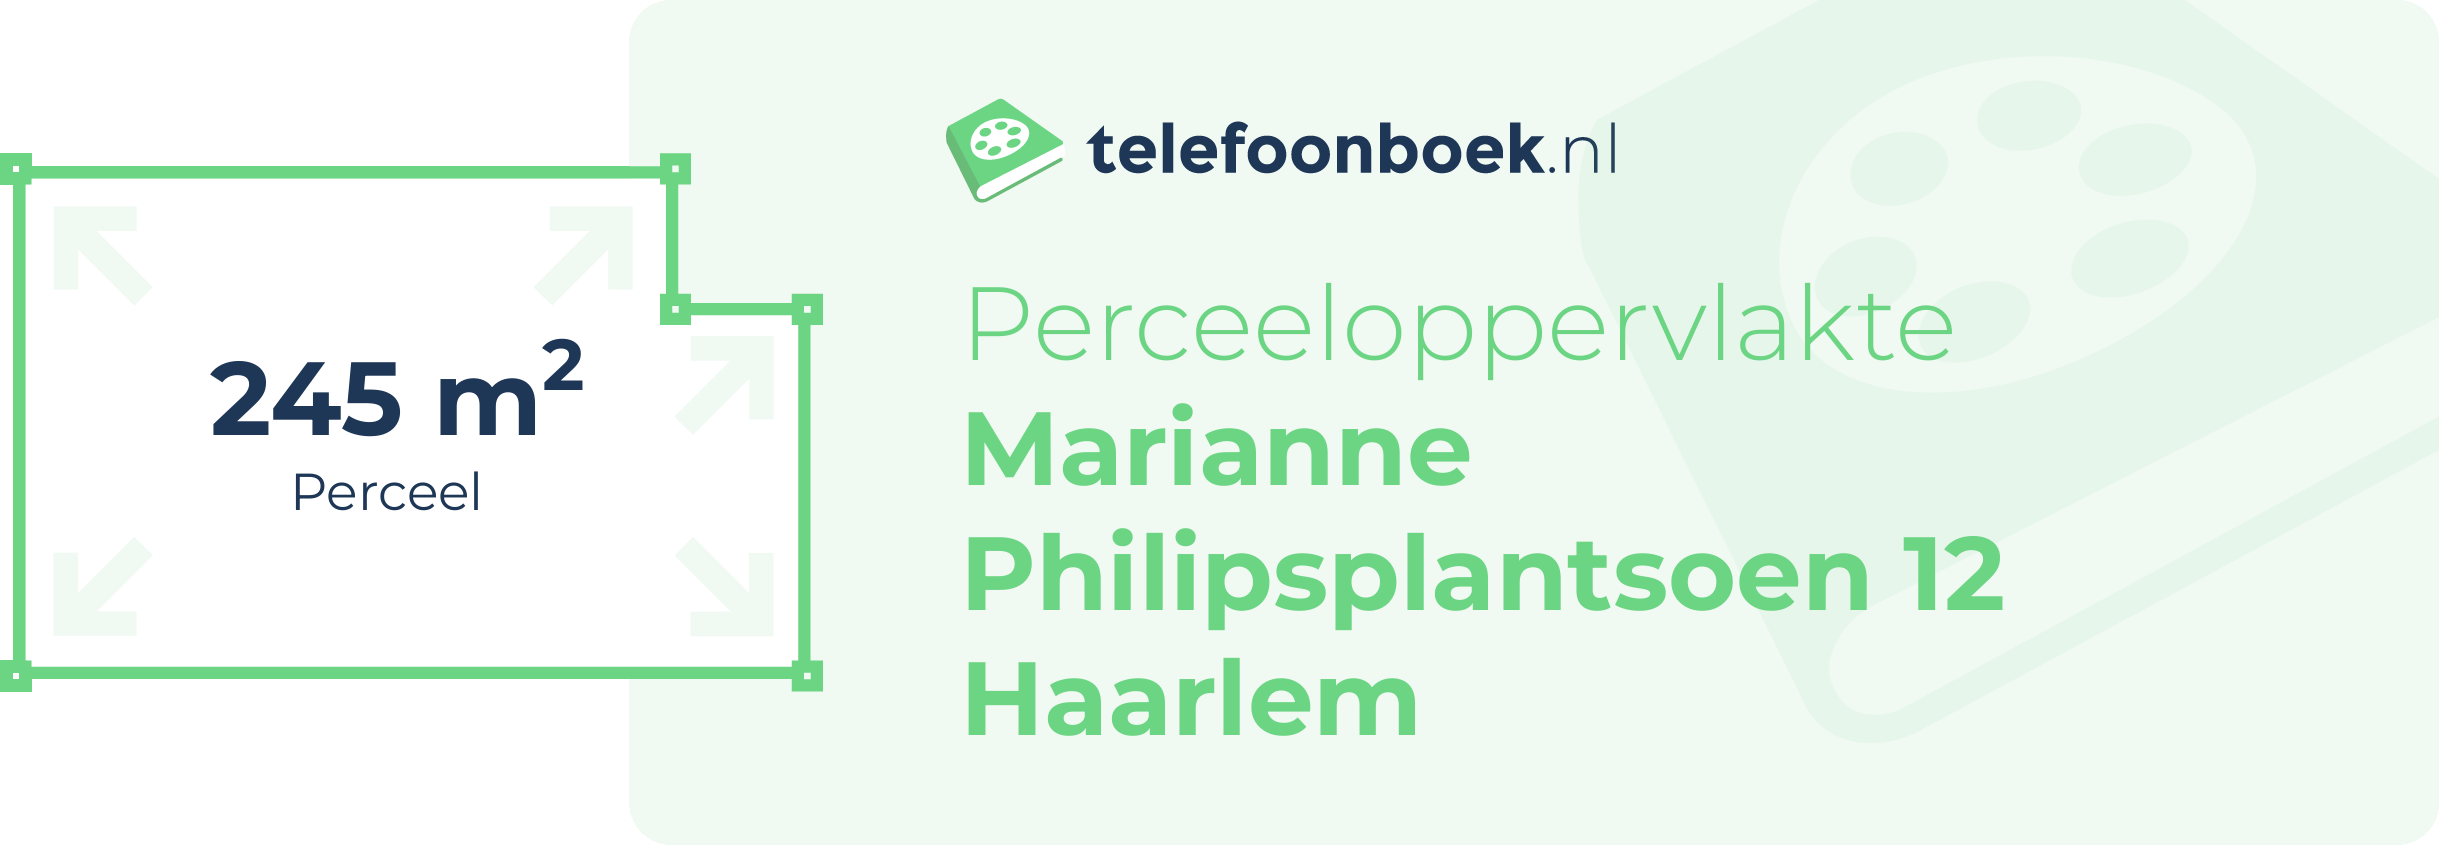 Perceeloppervlakte Marianne Philipsplantsoen 12 Haarlem